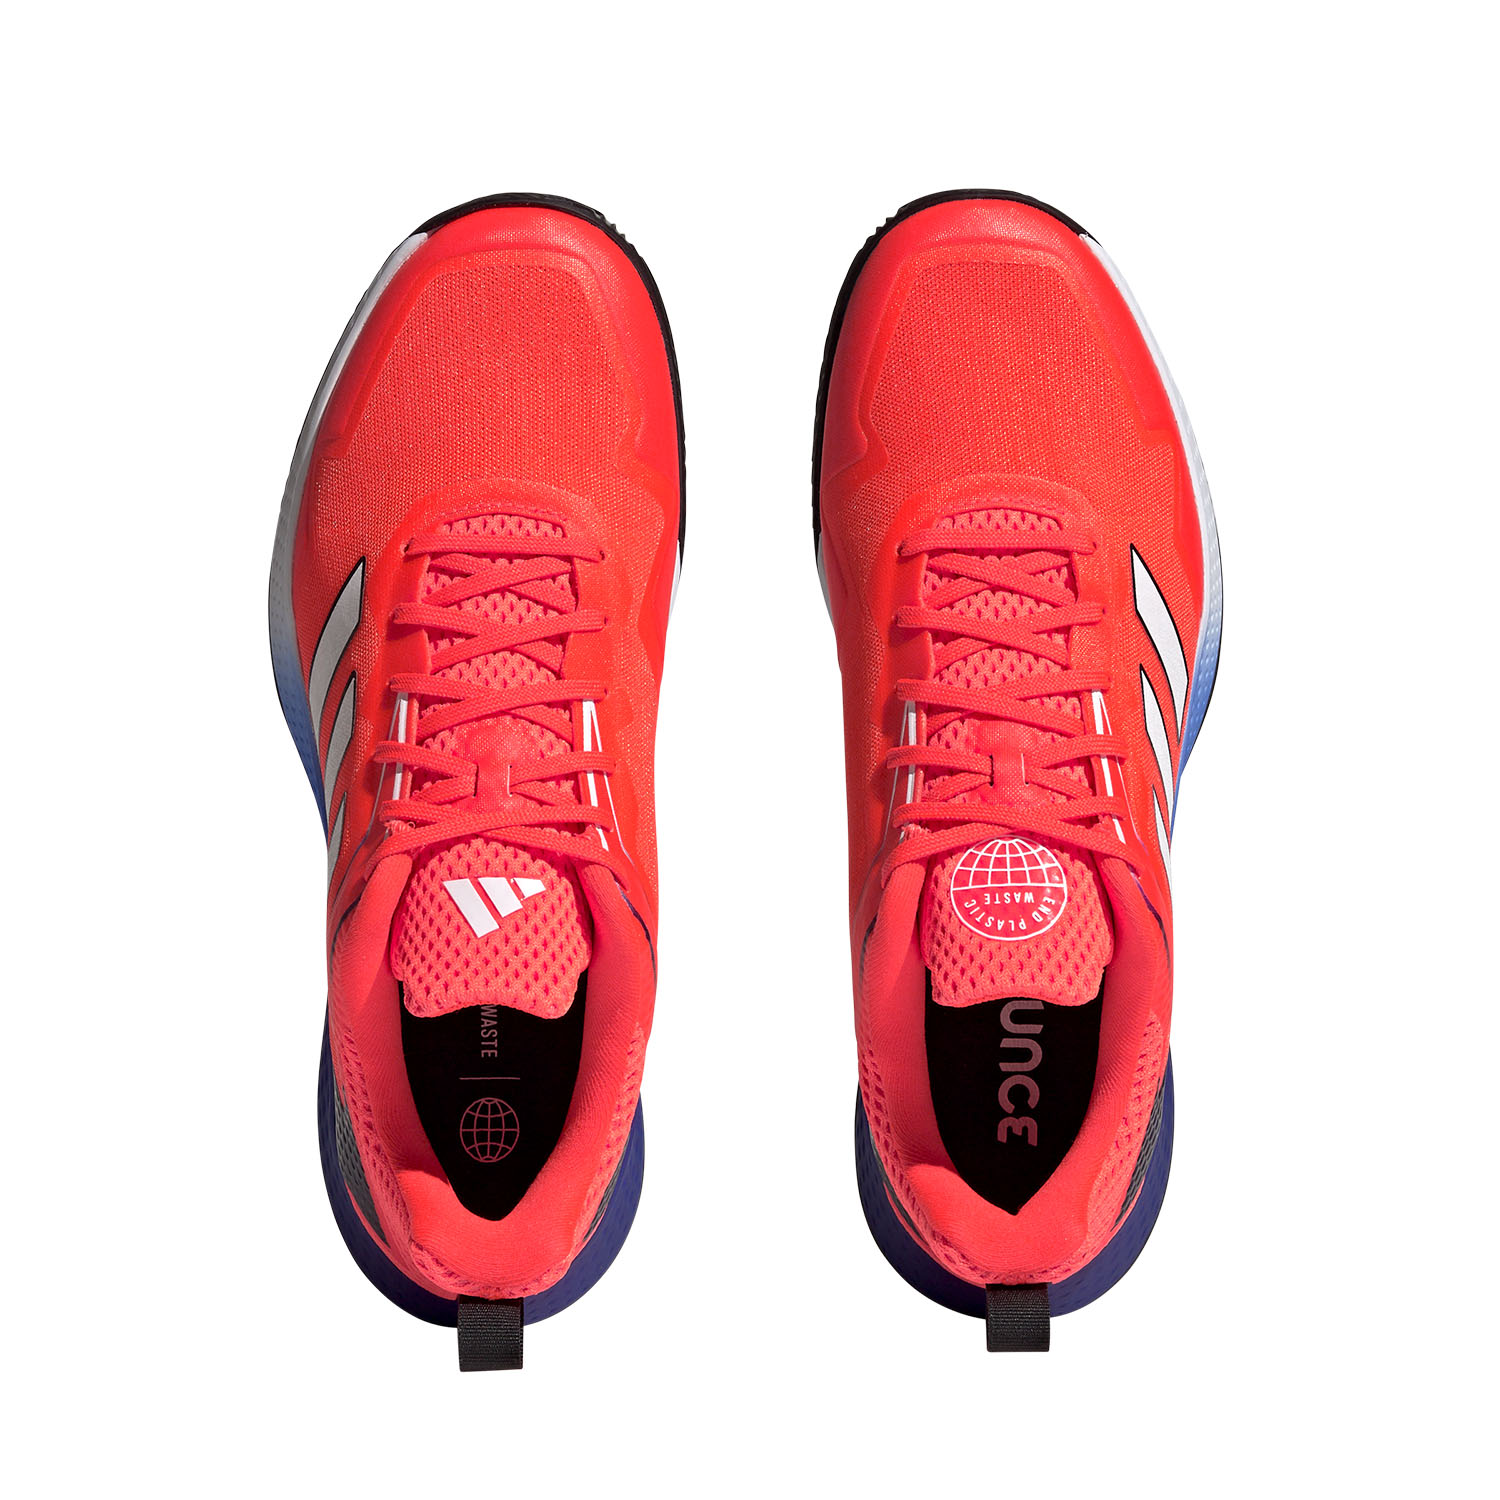 adidas Defiant Speed Clay - Solar Red/Ftwr White/Lucid Blue